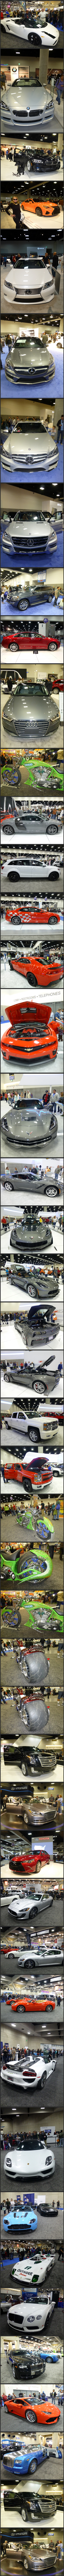      2015   ,    2015 Corvette Stingray